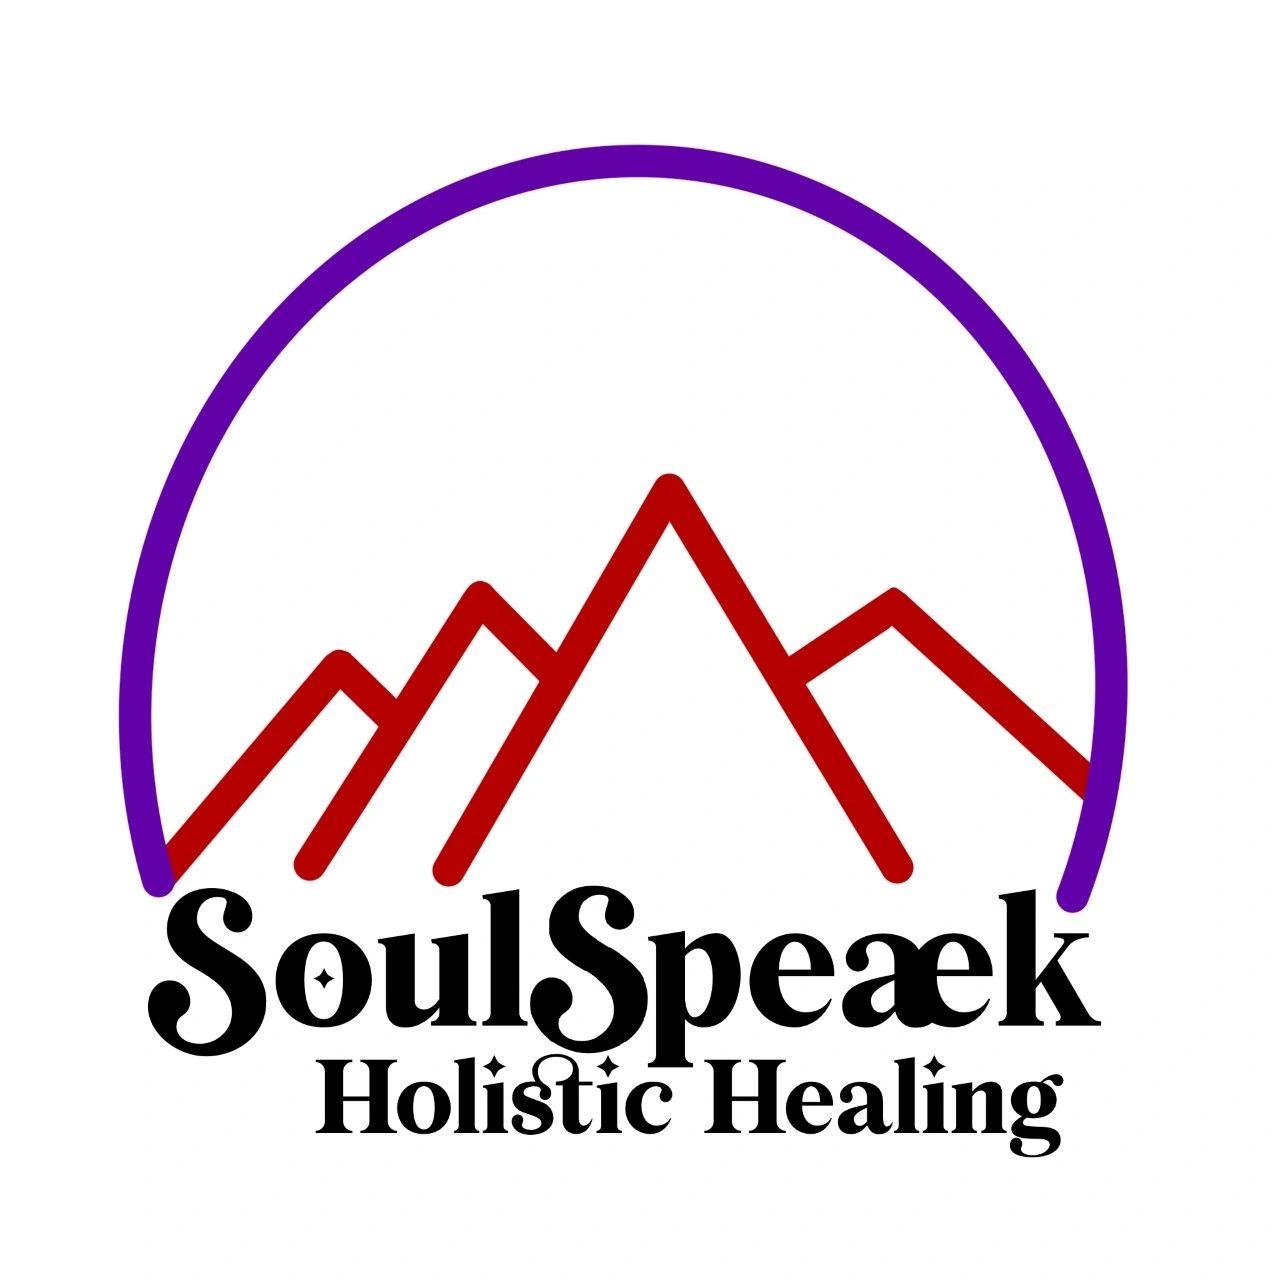 Soulspeak Holistic Healing